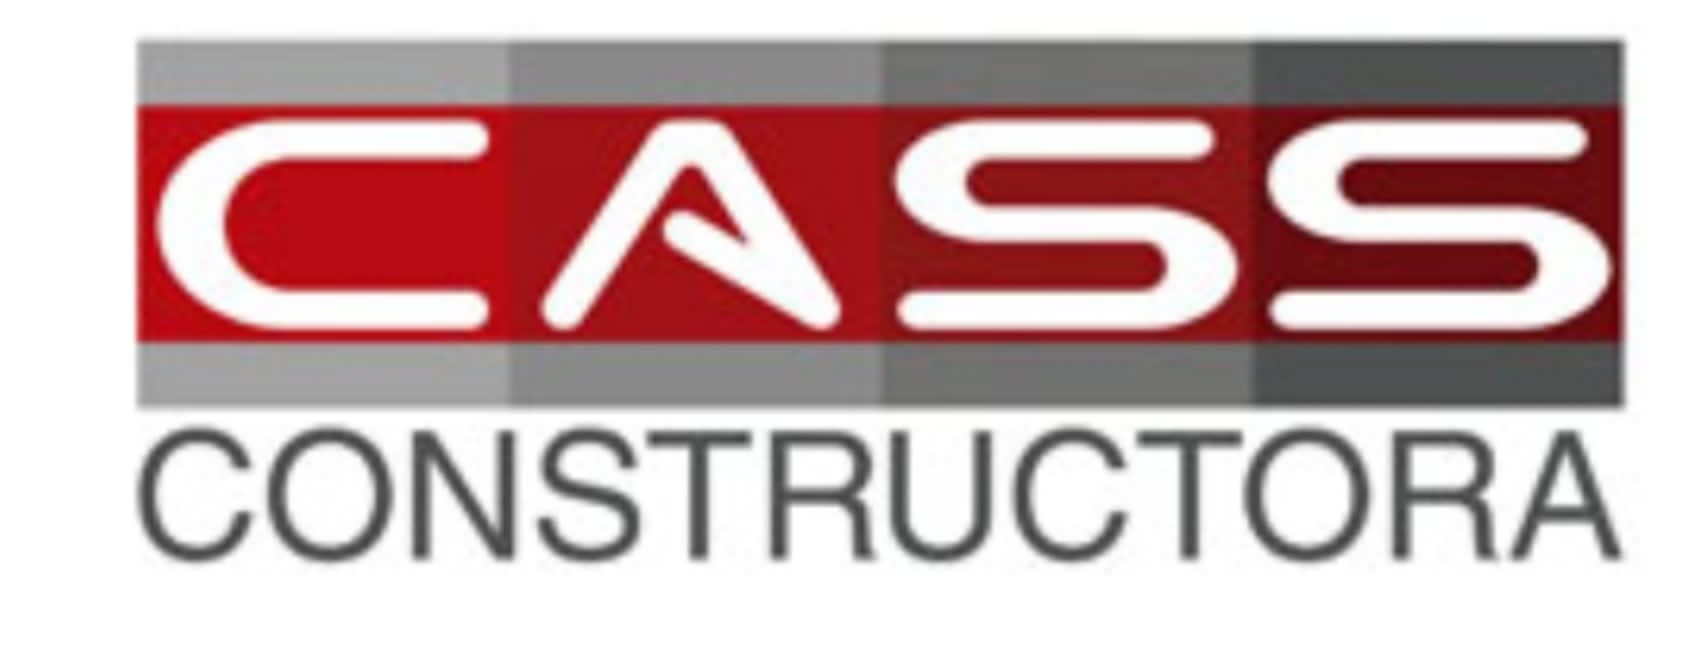 Constructora Cass Spa